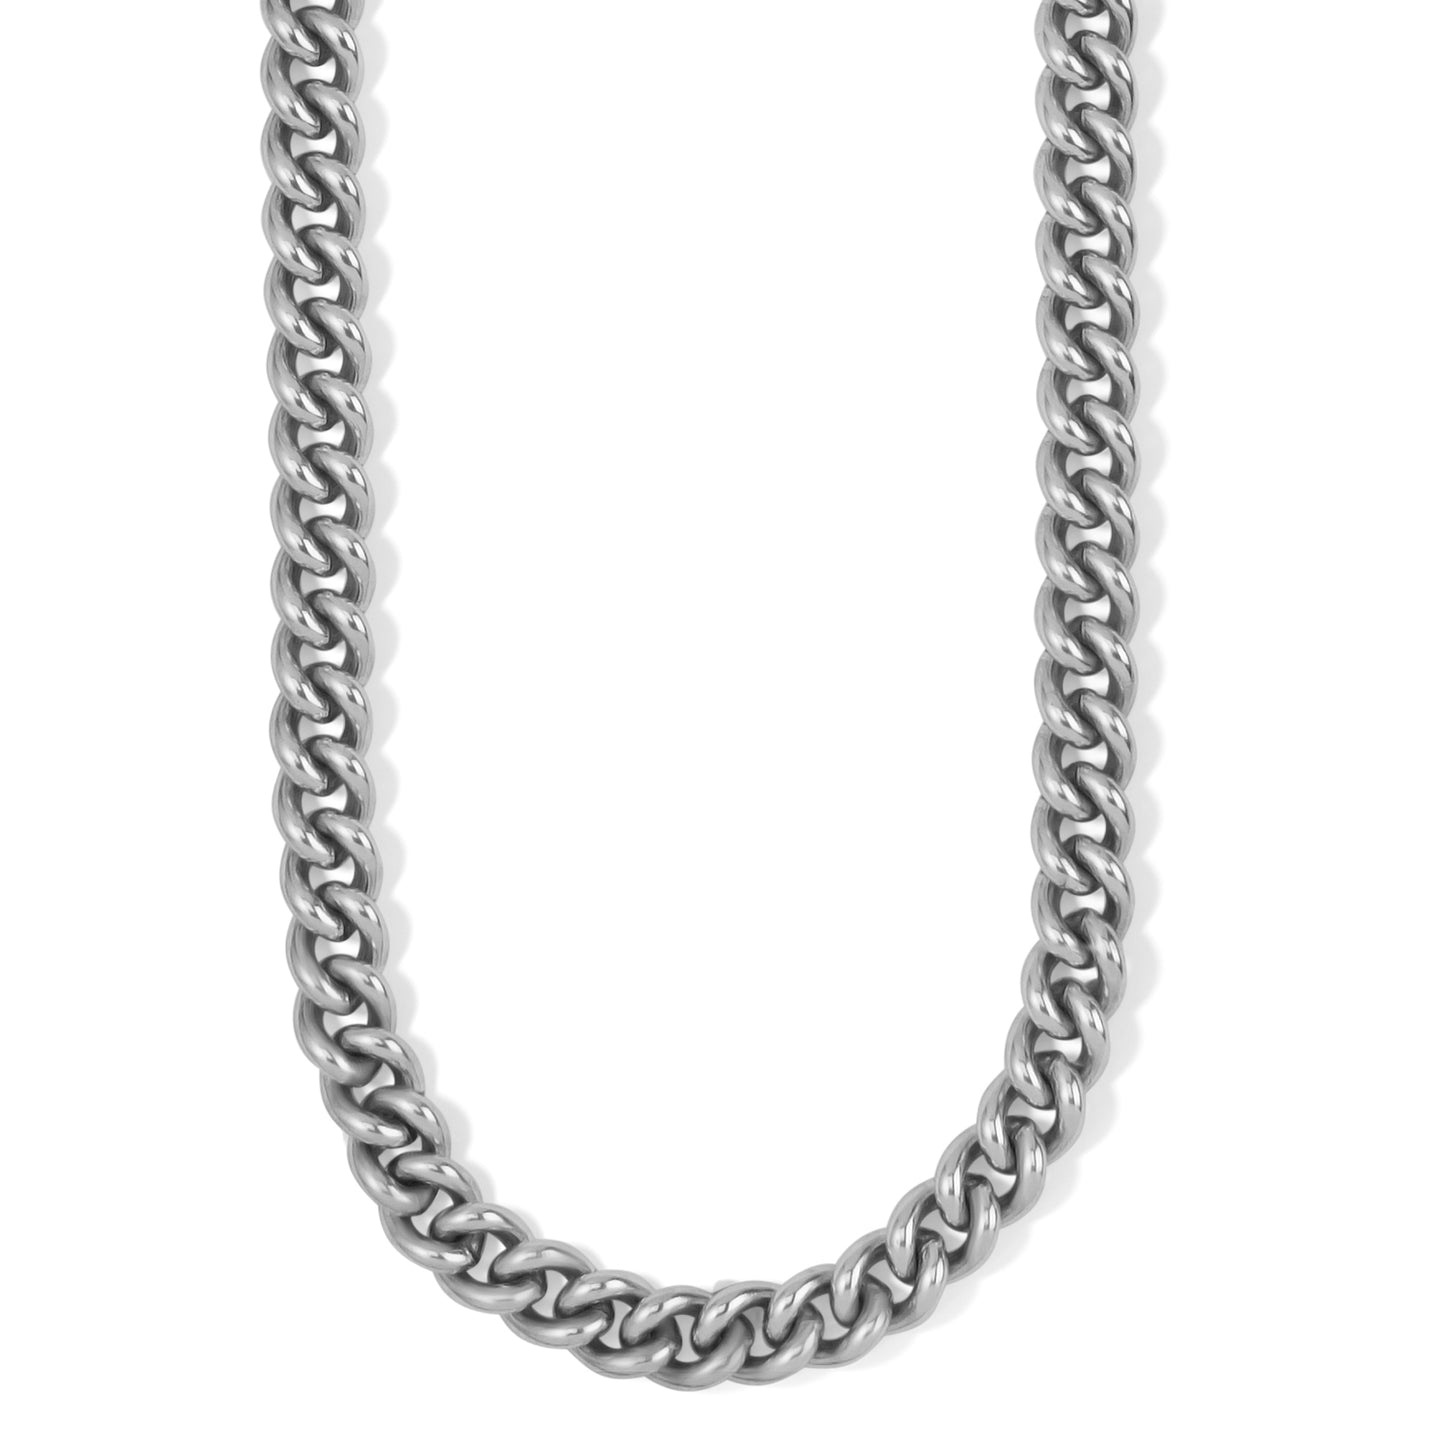 Ferrara Roma Curb Chain Necklace